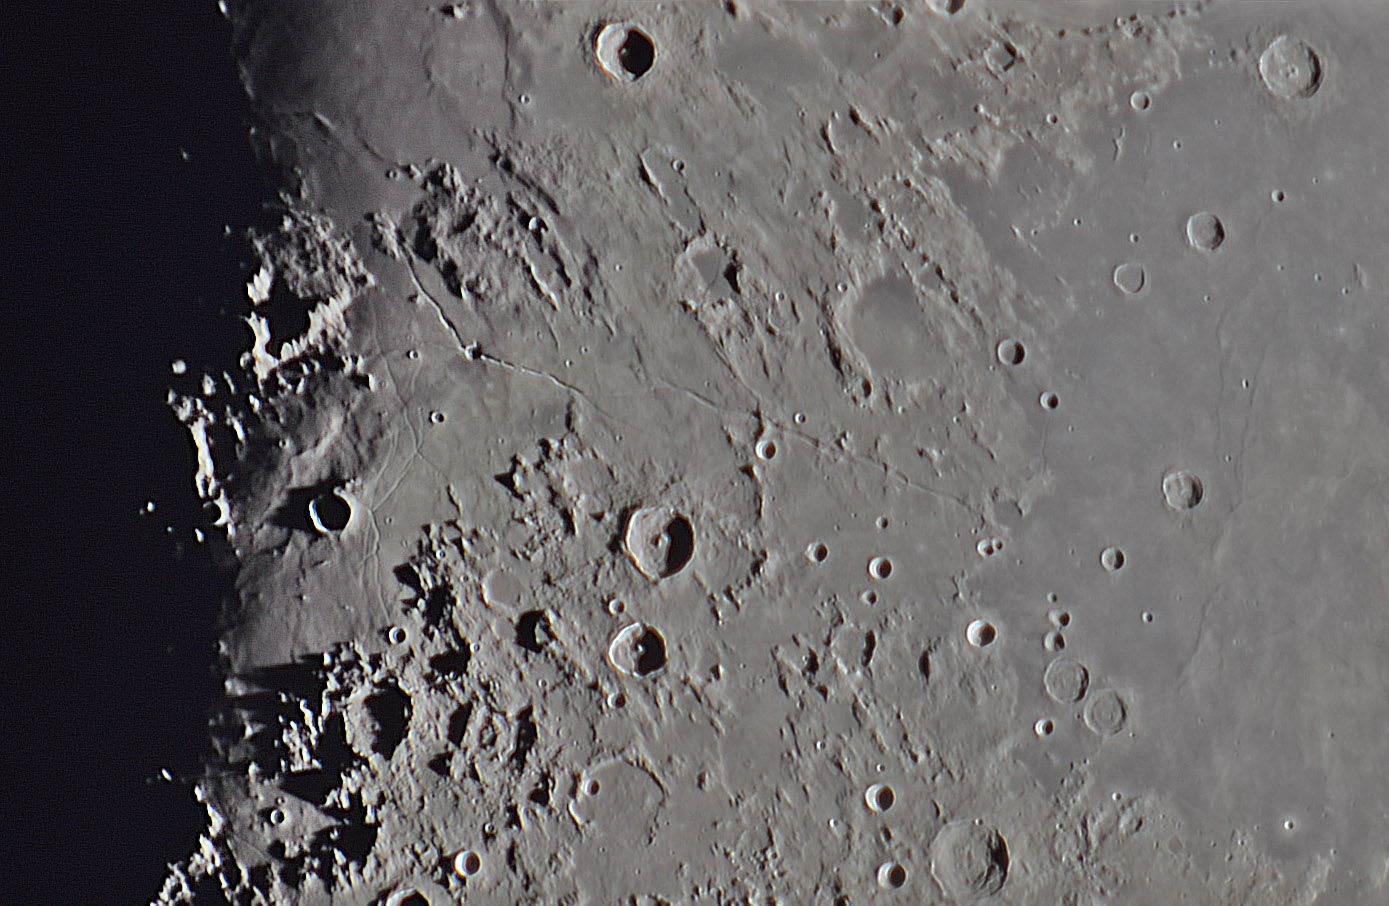 Lune 1000 images Finale.jpg